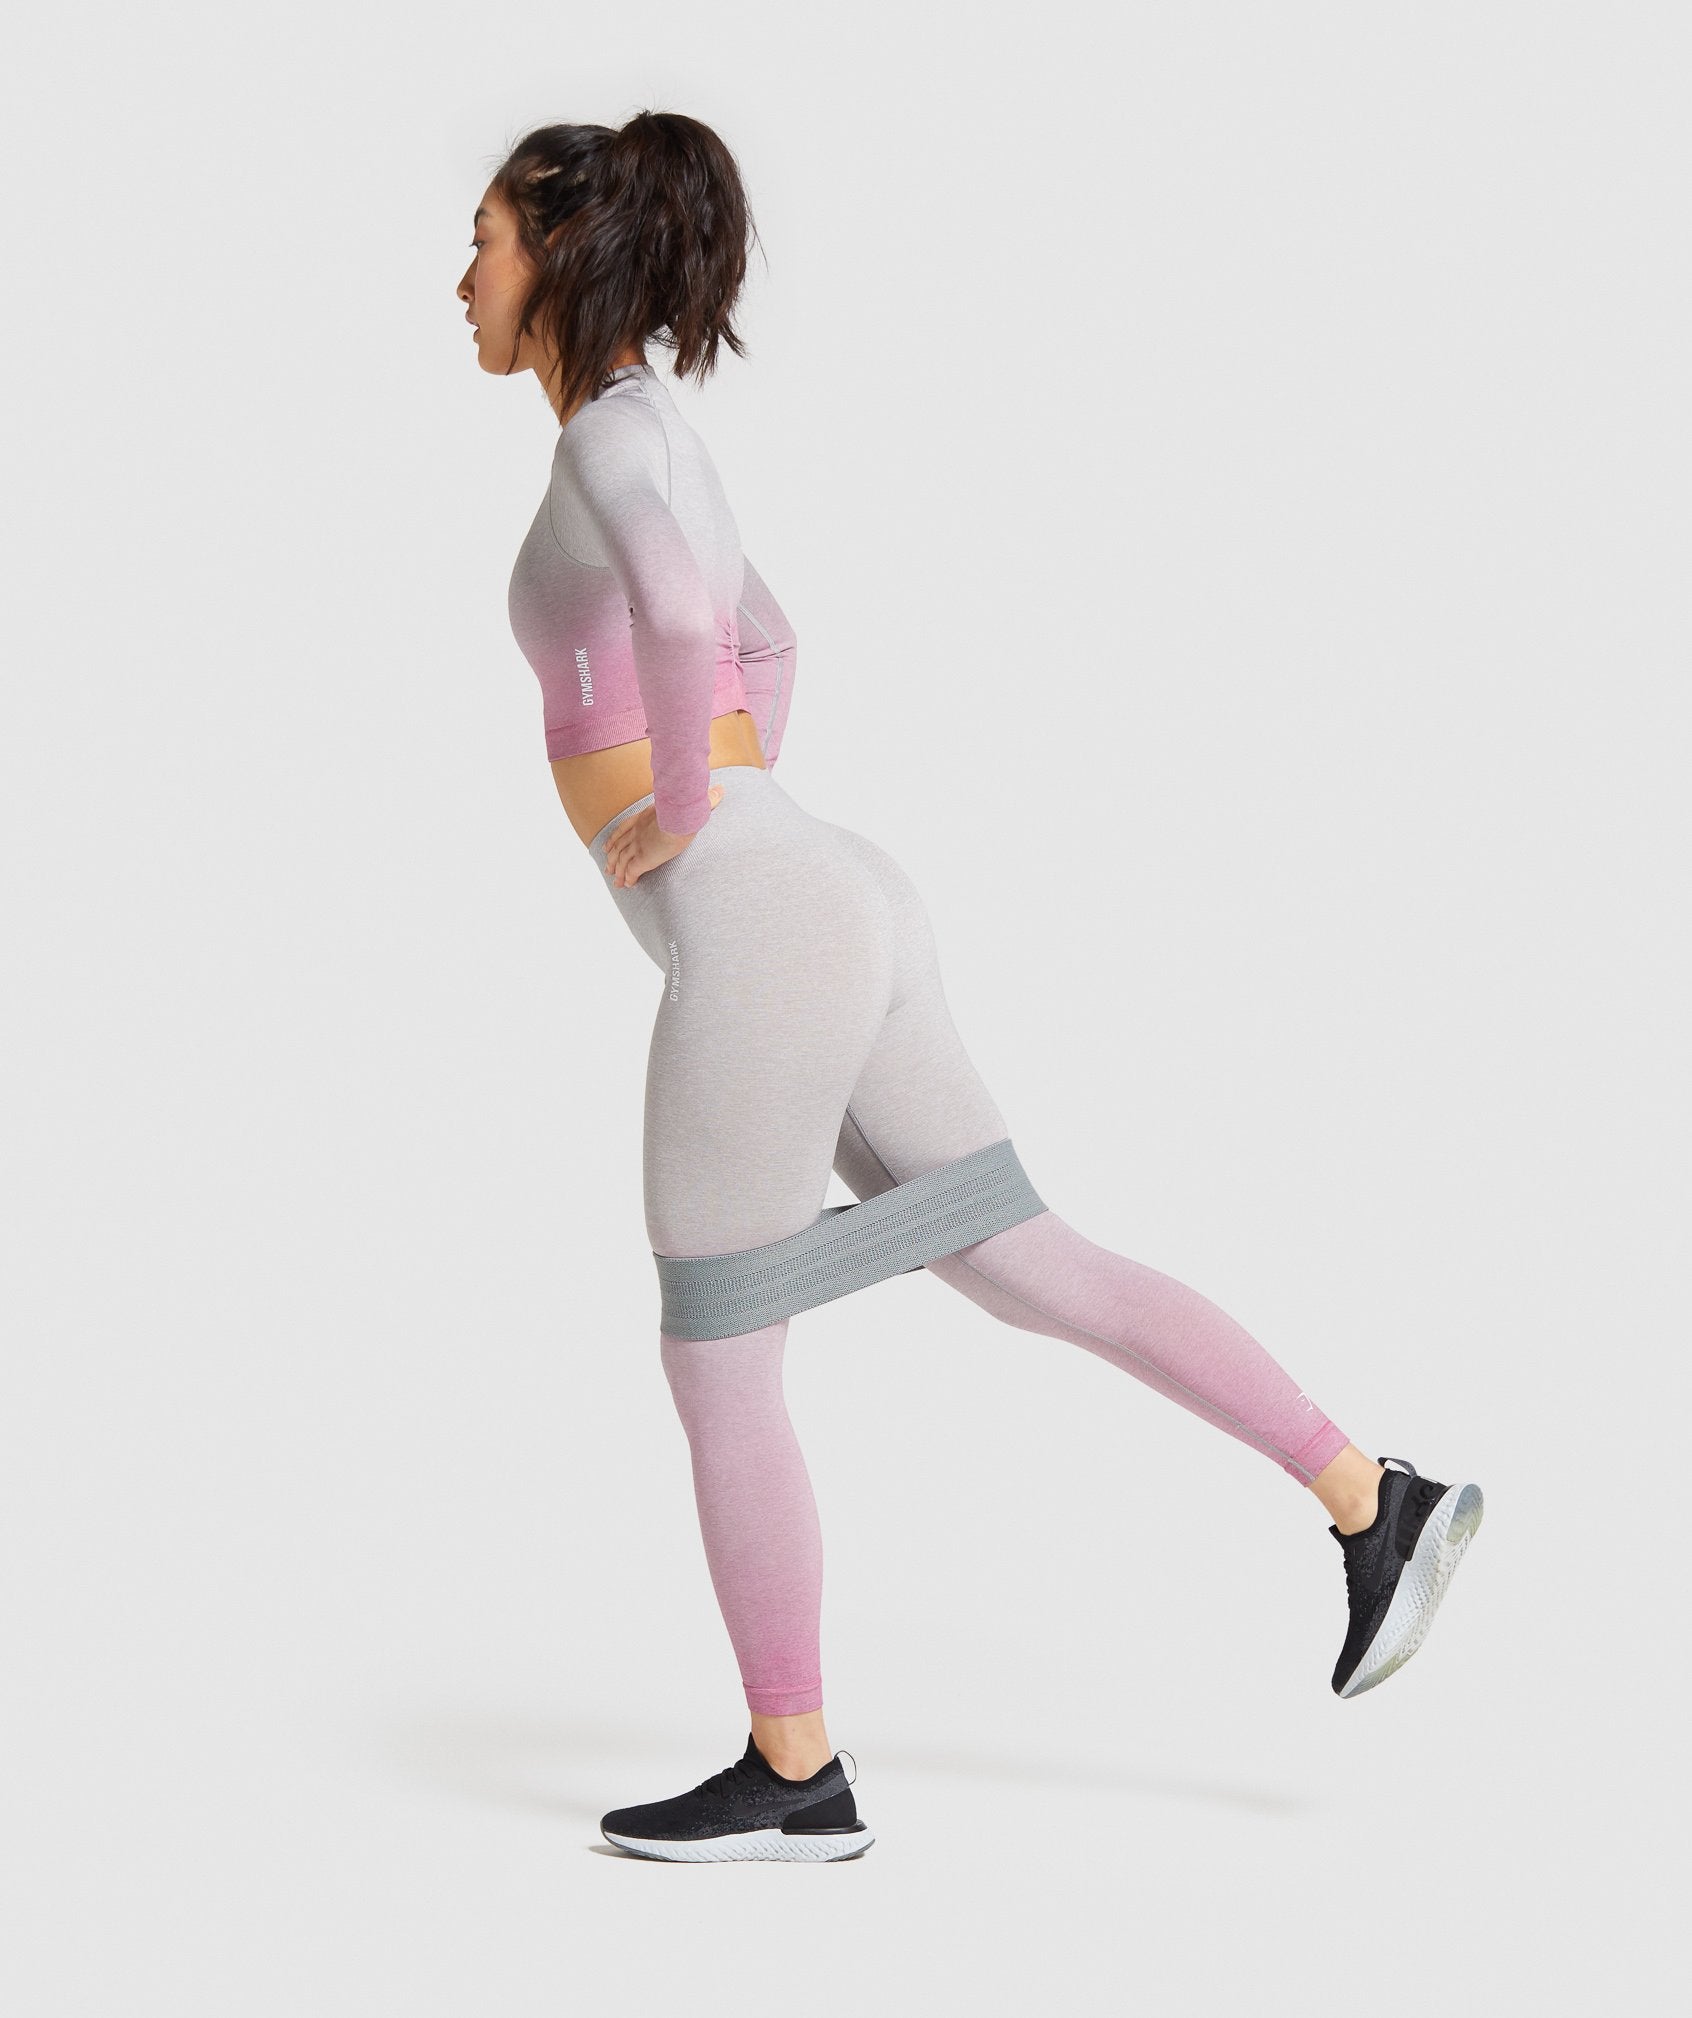 Gymshark Adapt Marl Seamless Leggings Pink Size M - $31 (43% Off